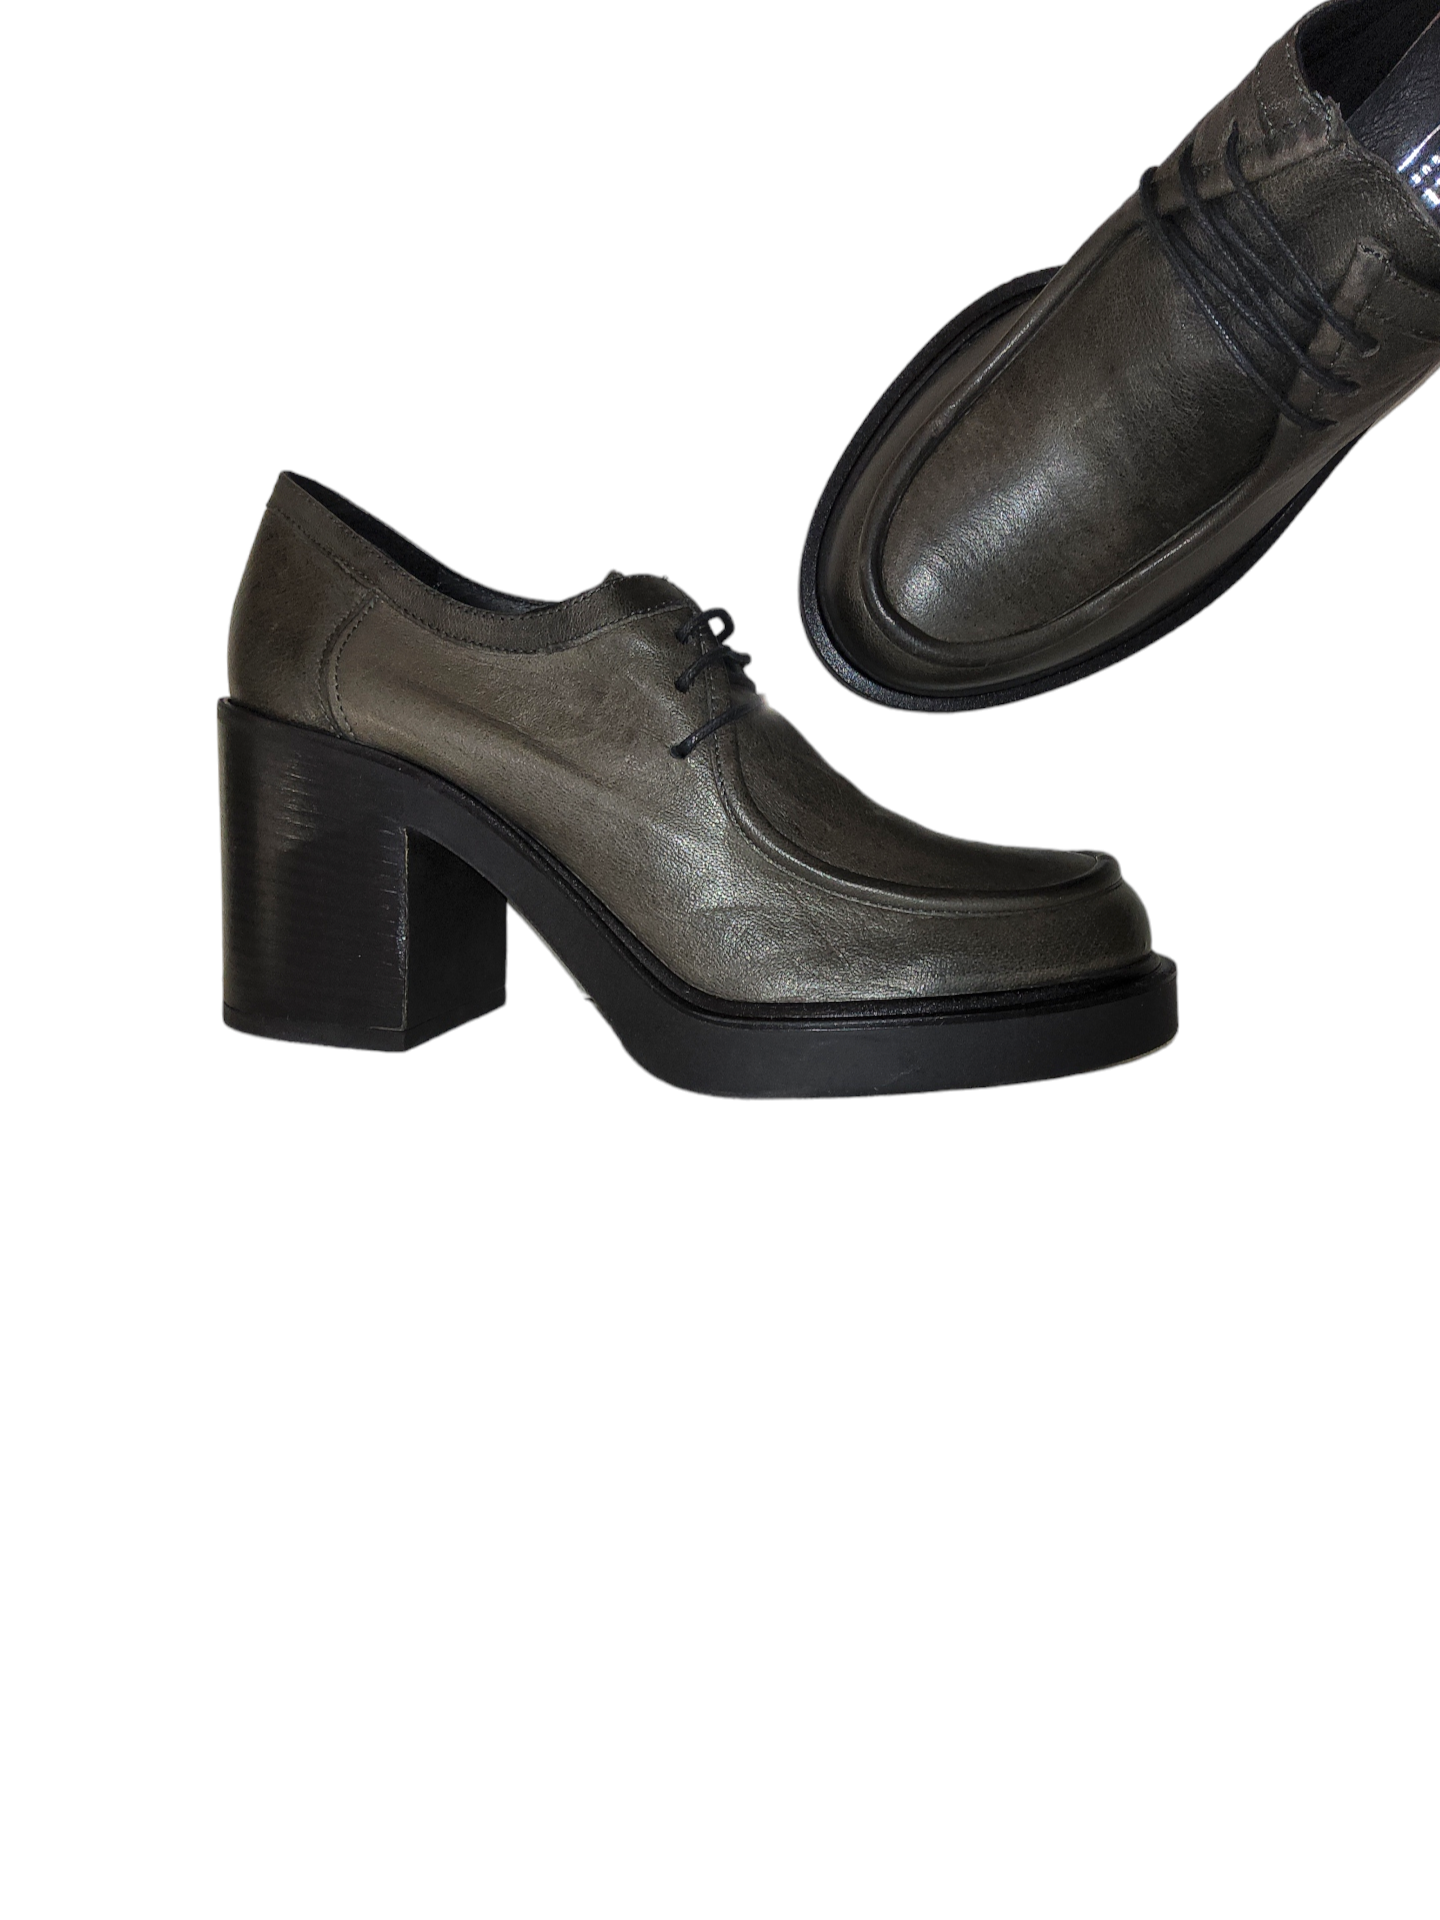 Grey leather platform shoe